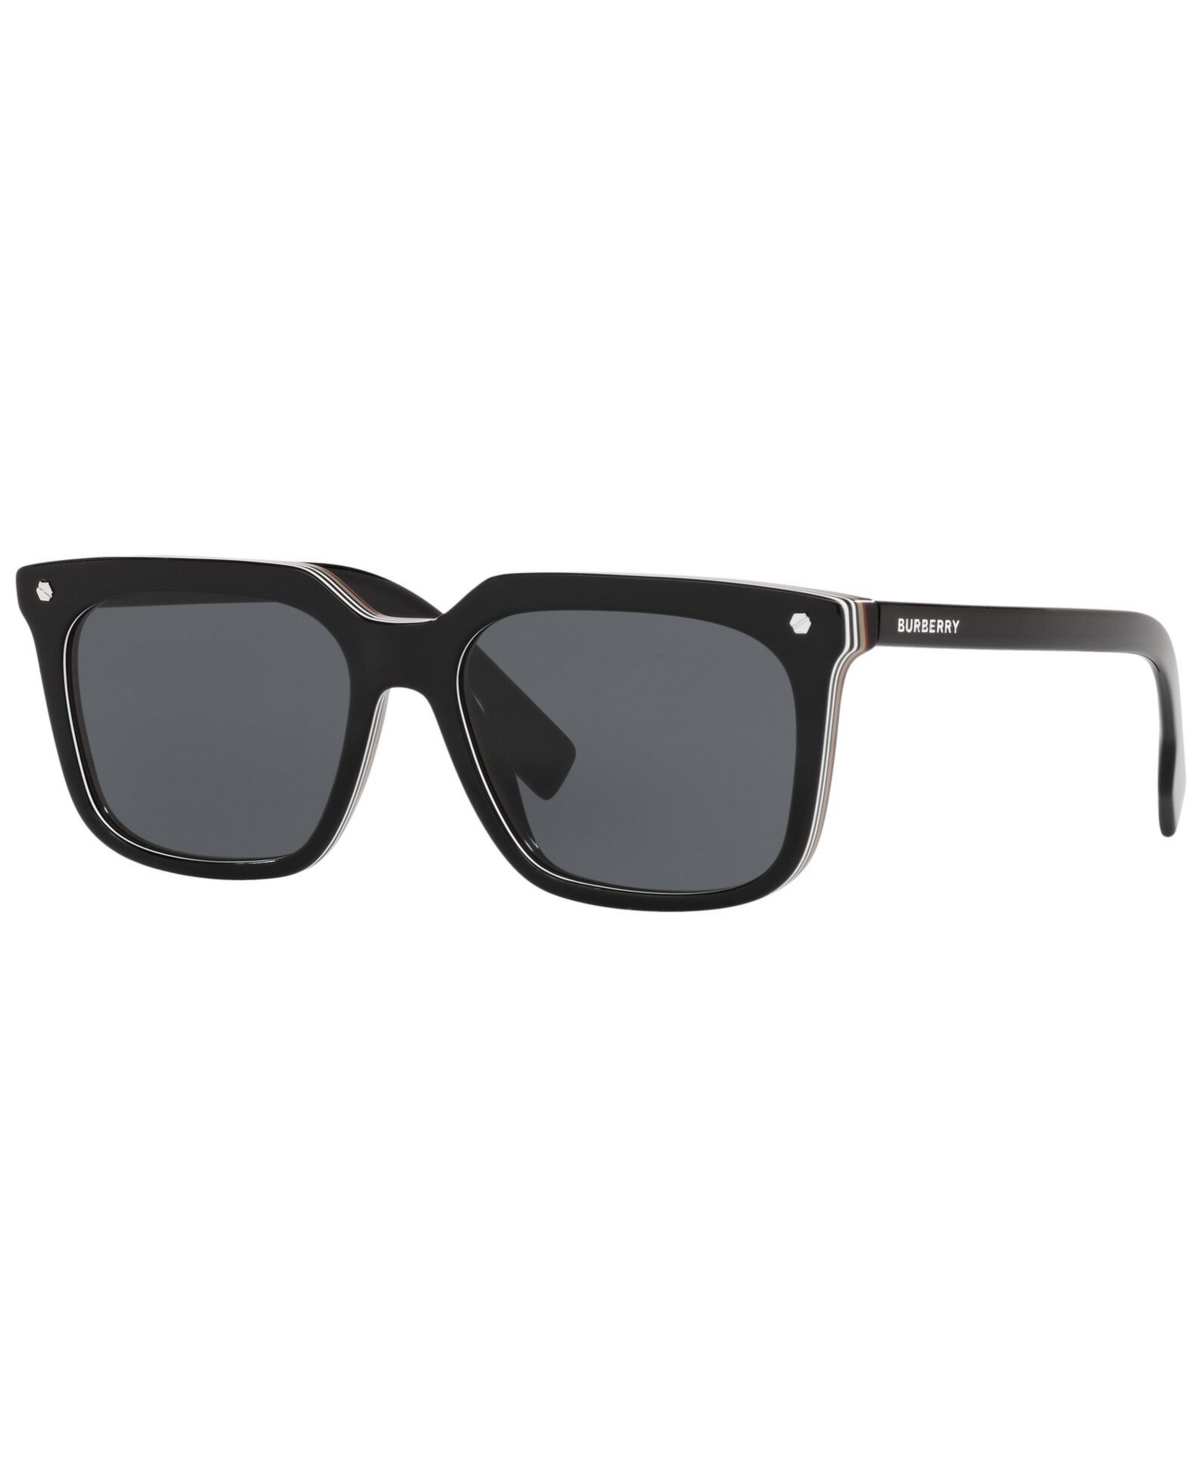 Men's Carnaby Sunglasses, BE4337 - BLACK/DARK GREY